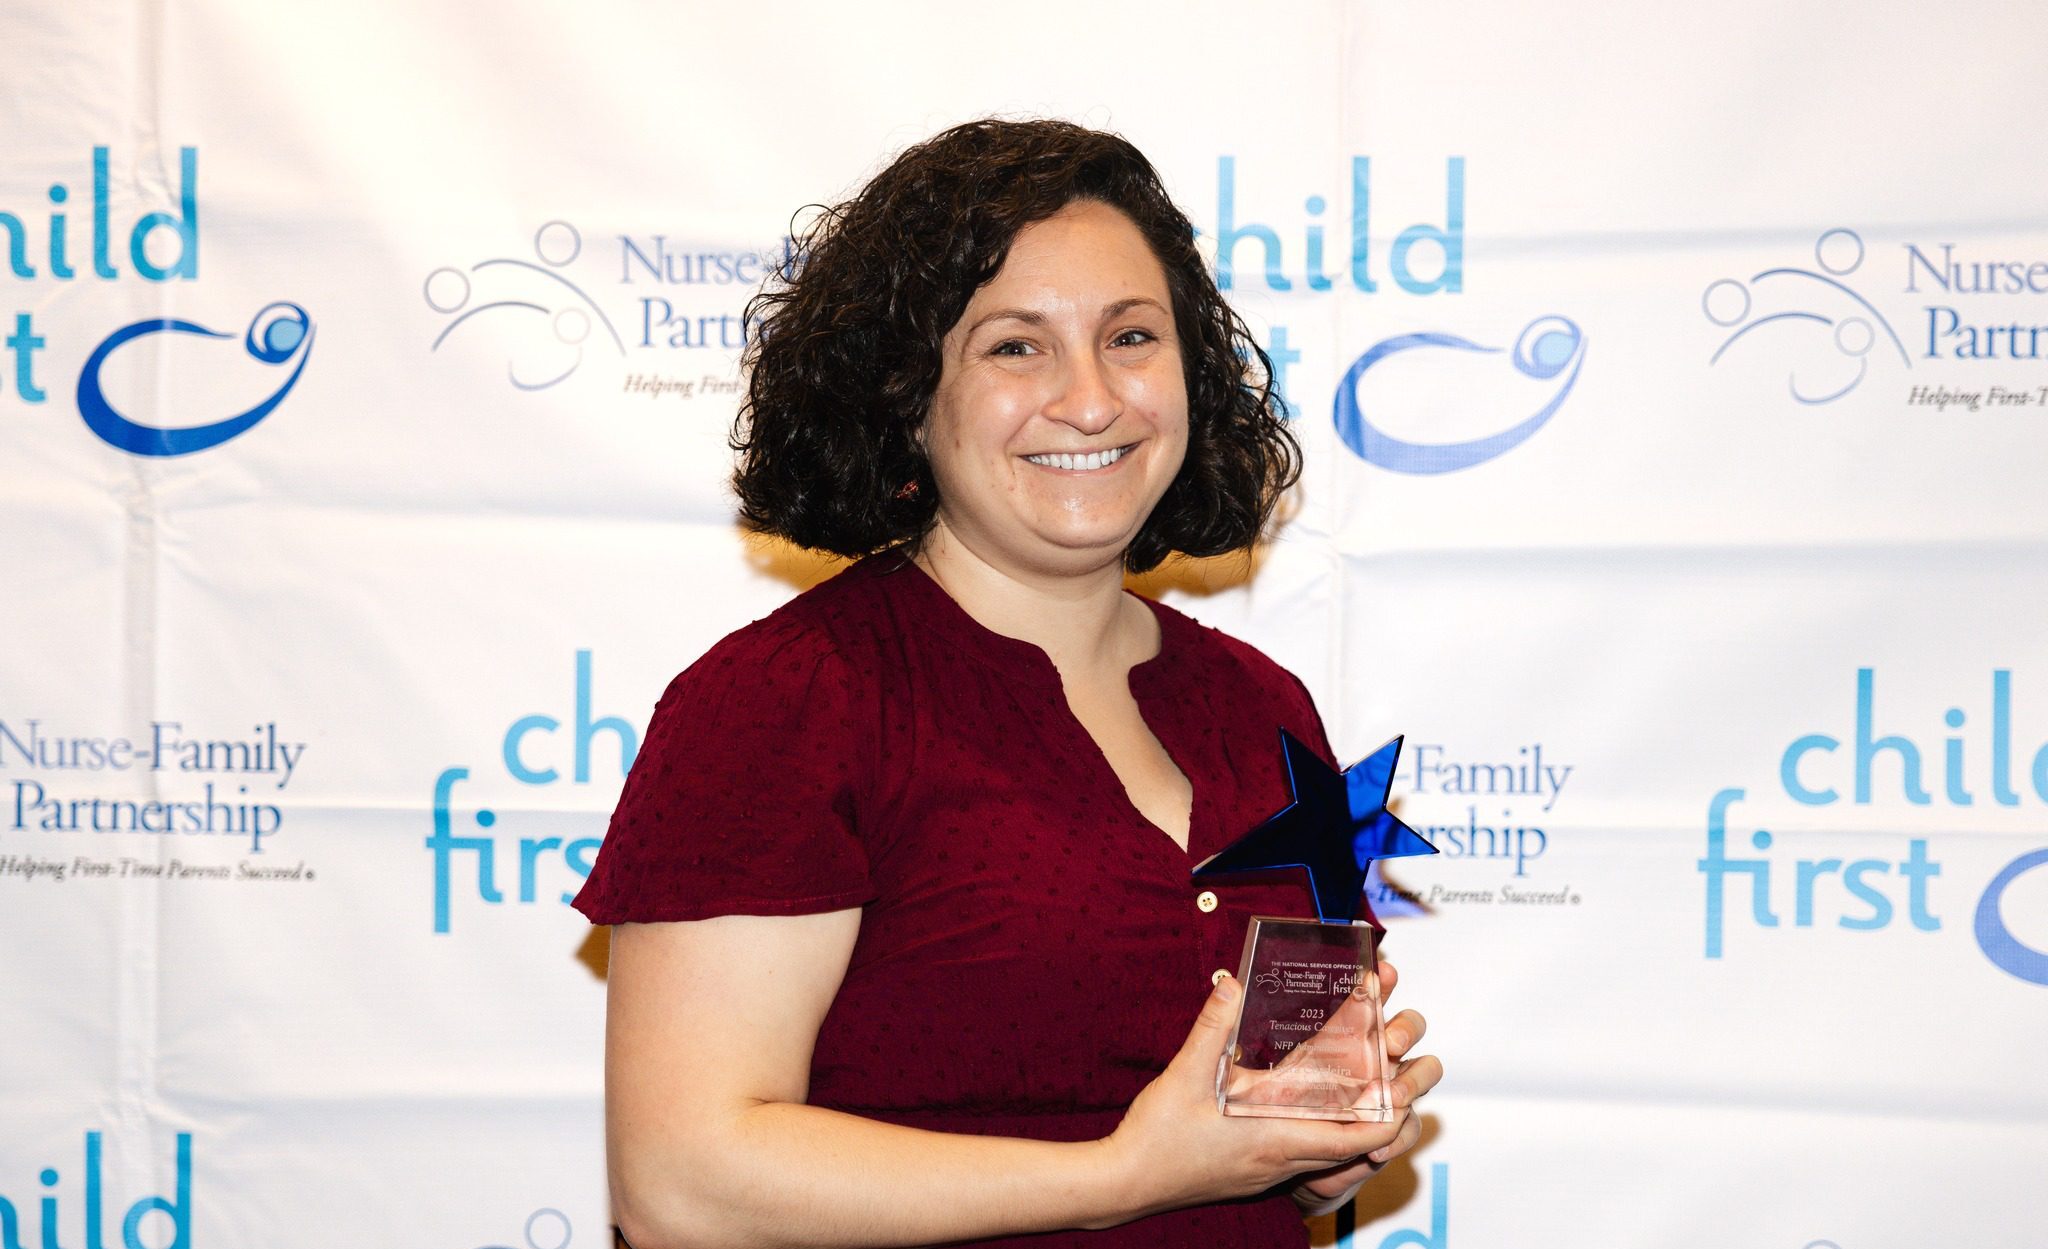 Celebrating Our Nurse-Family Partnership National Award Winner